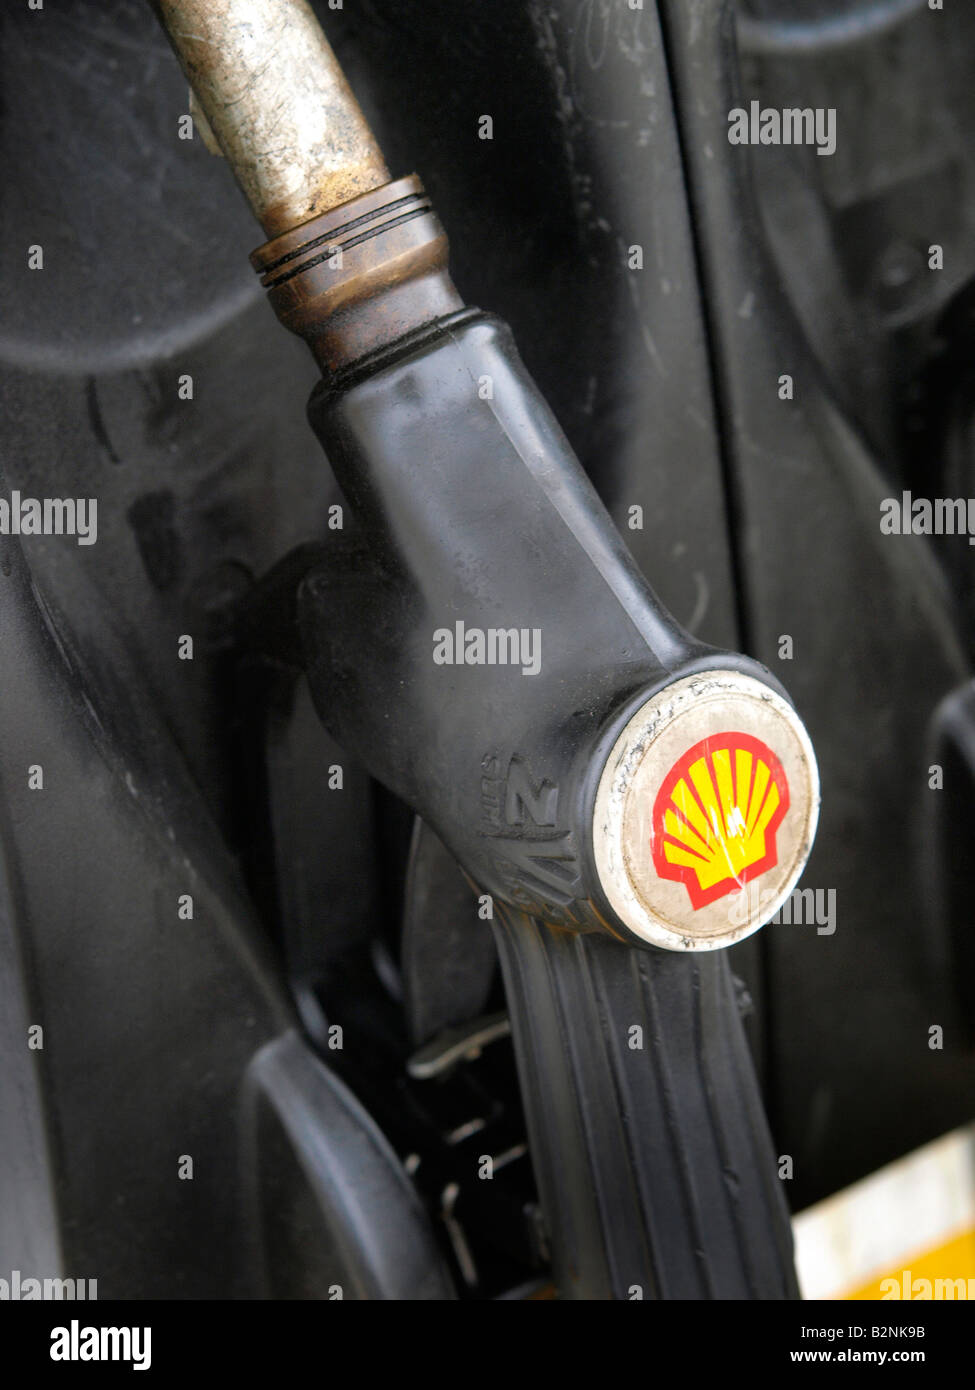 Shell company logo on a gas diesel pump handle grip Hazeldonk Flanders Belgium Stock Photo